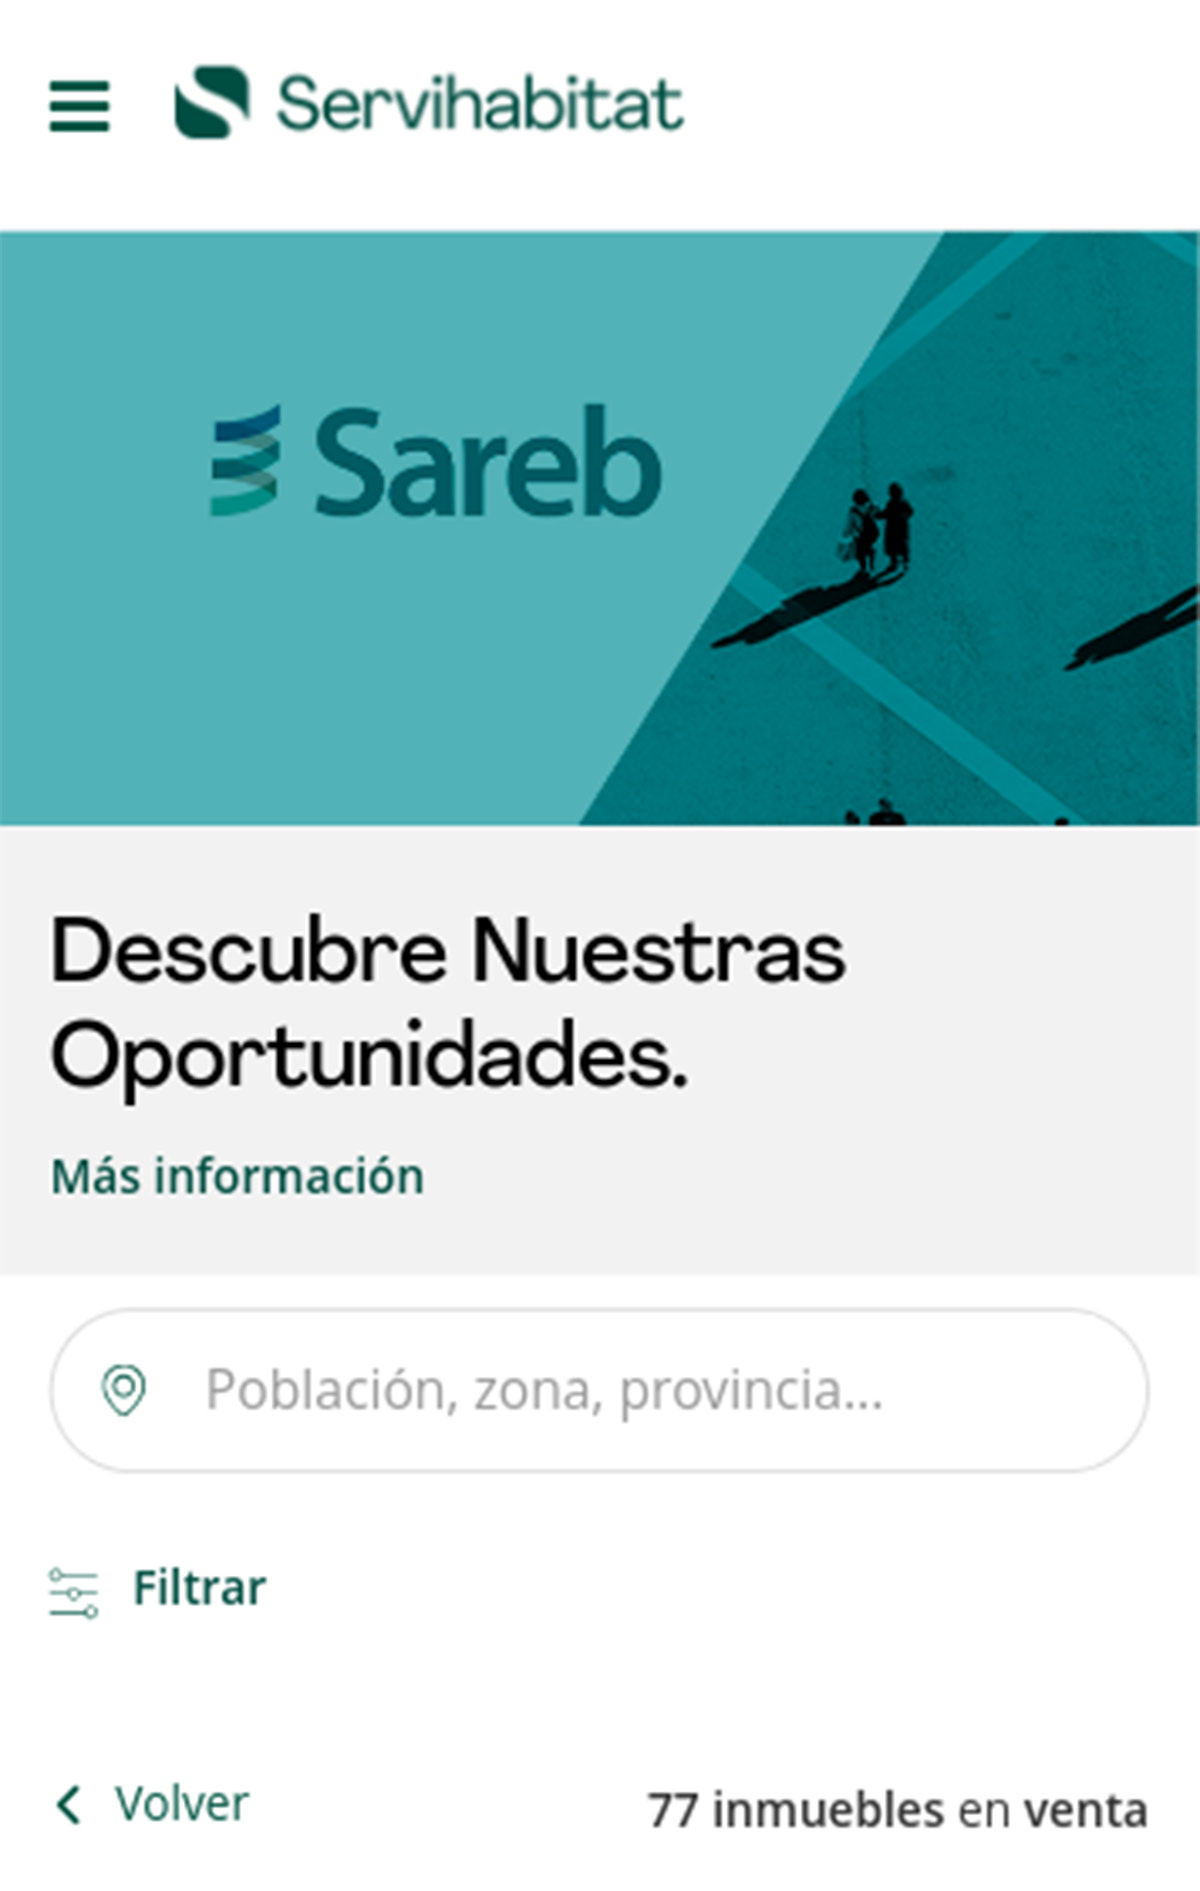 Catálogo de viviendas en Servihabitat de la Sareb